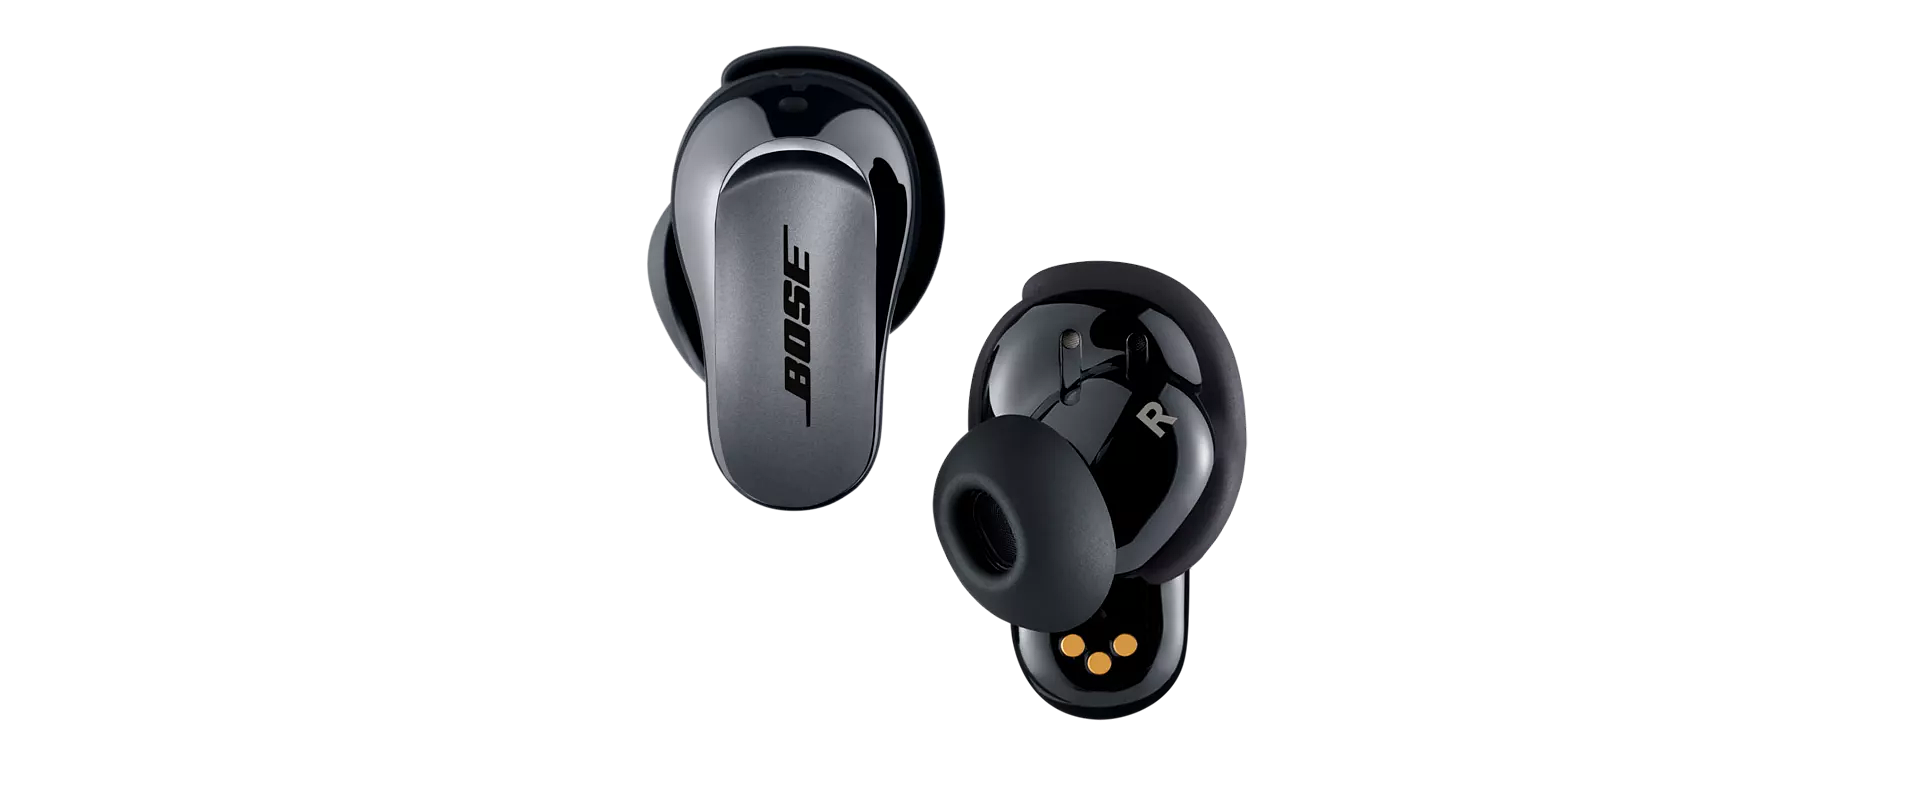 Nuevos auriculares Bose QuietComfort Earbuds True Wireless - TV